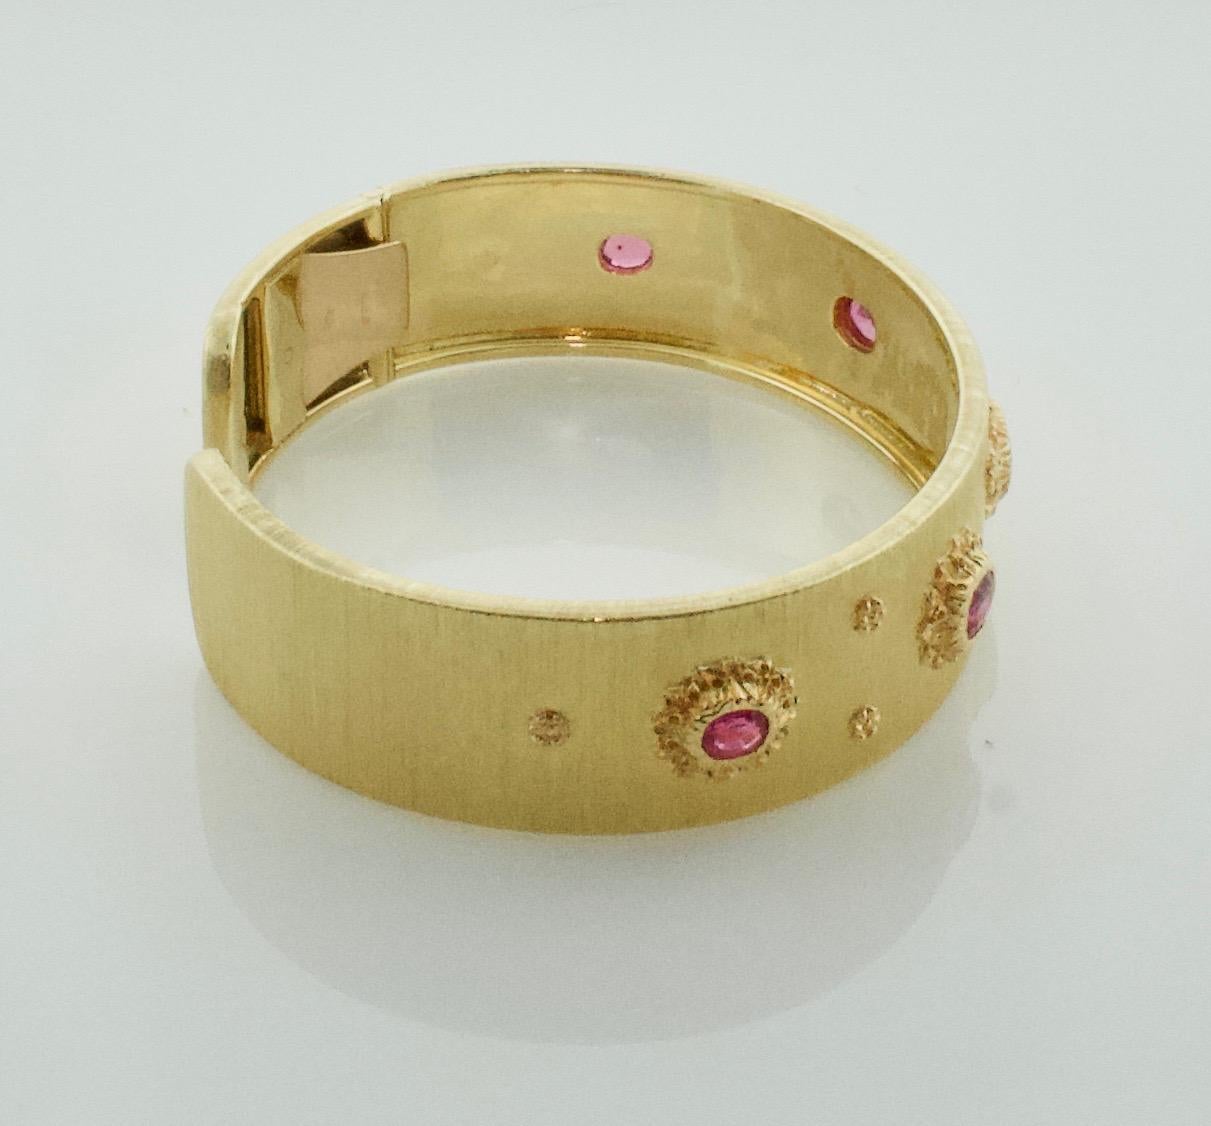 Oval Cut Mario Buccellati Ruby Bangle Bracelet in 18 Karat Yellow Gold